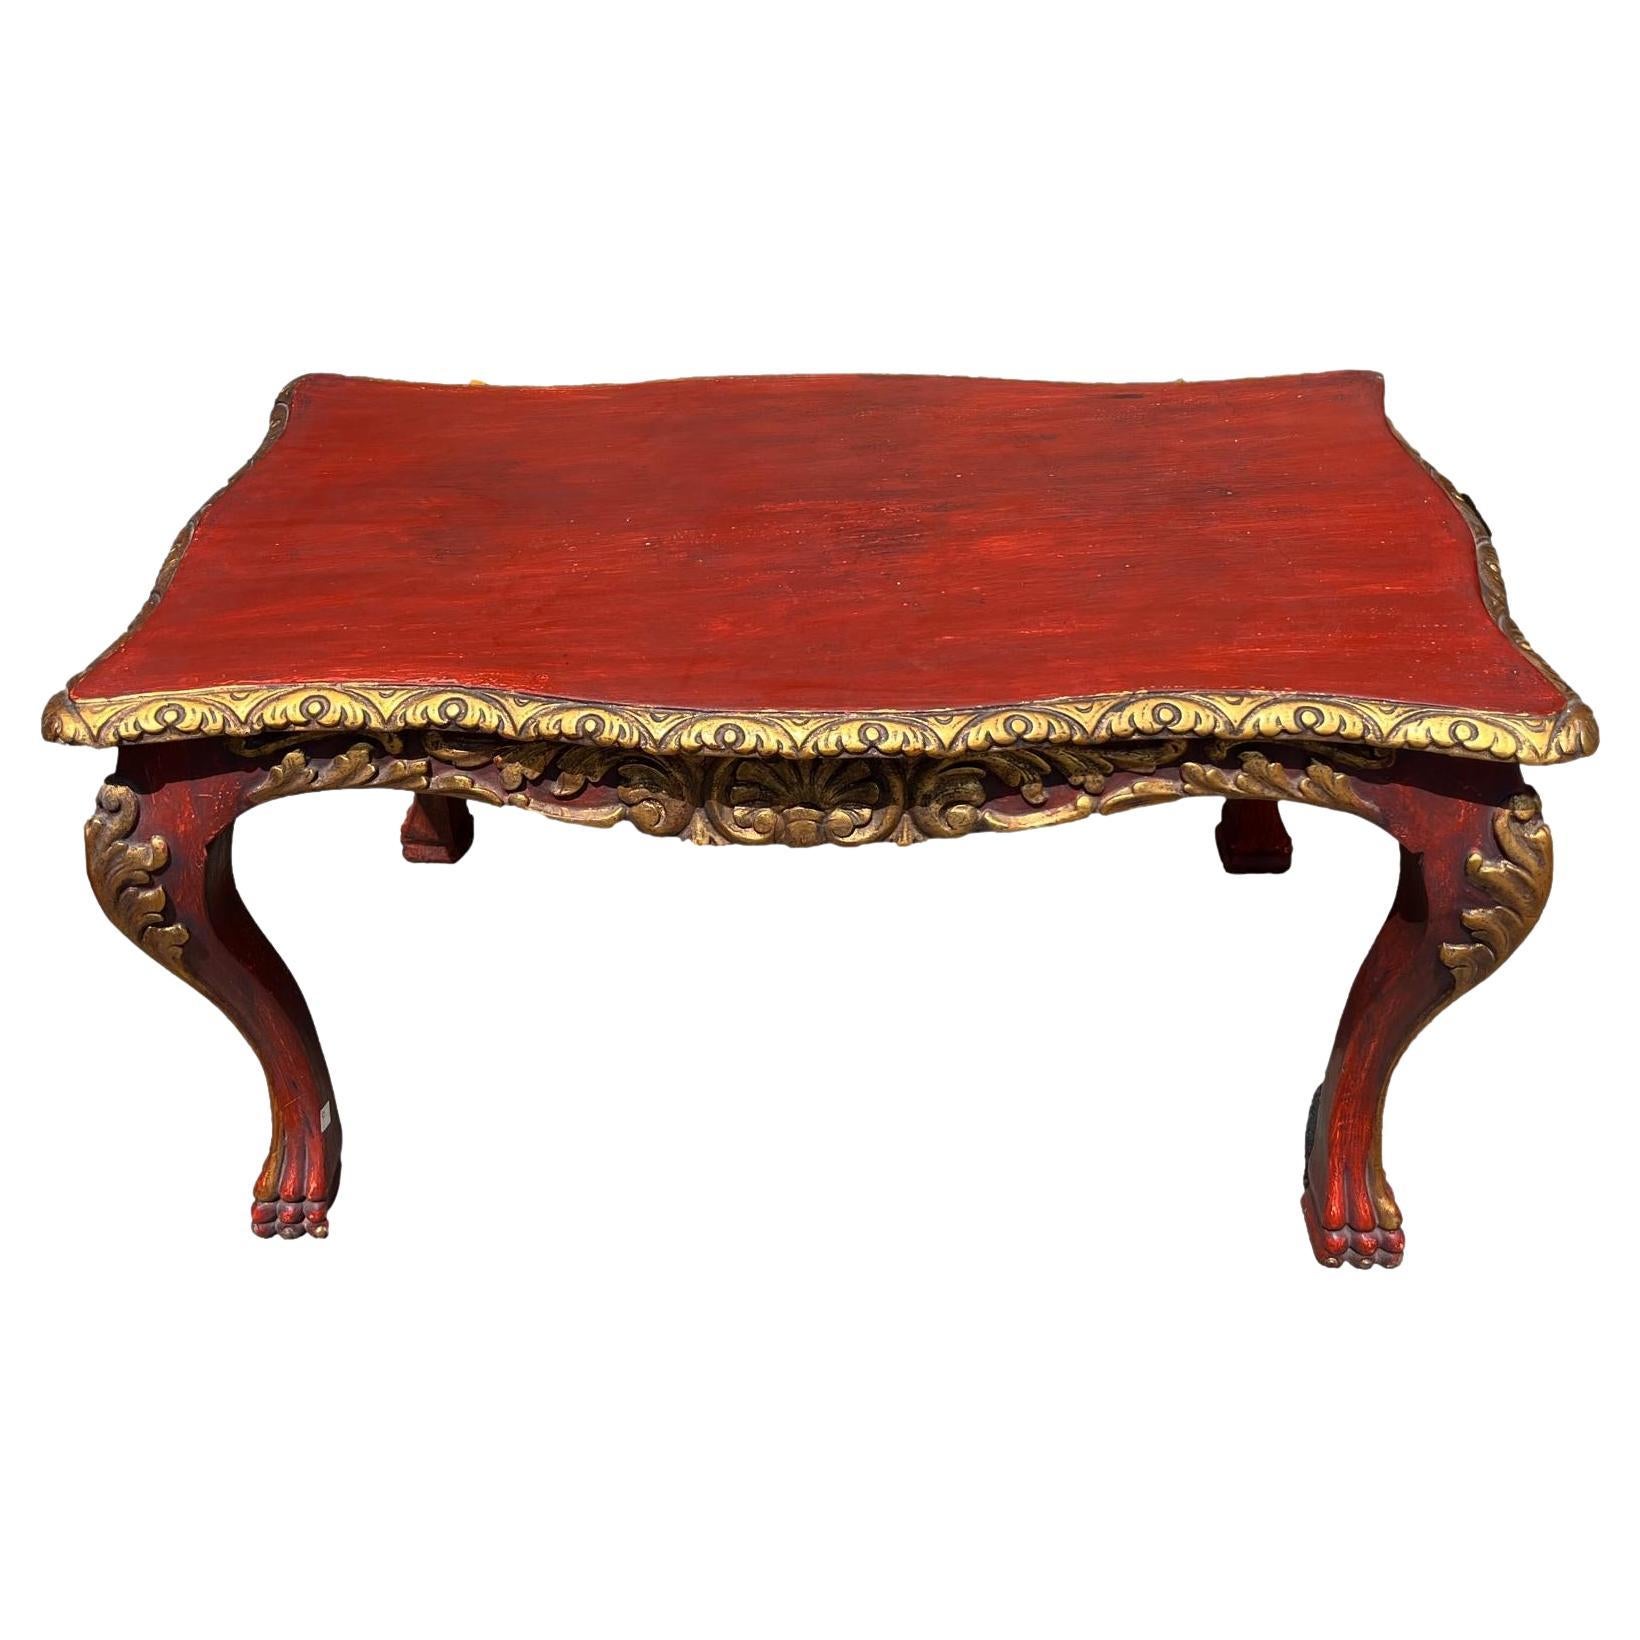 Bemalter und vergoldeter venezianischer Tisch